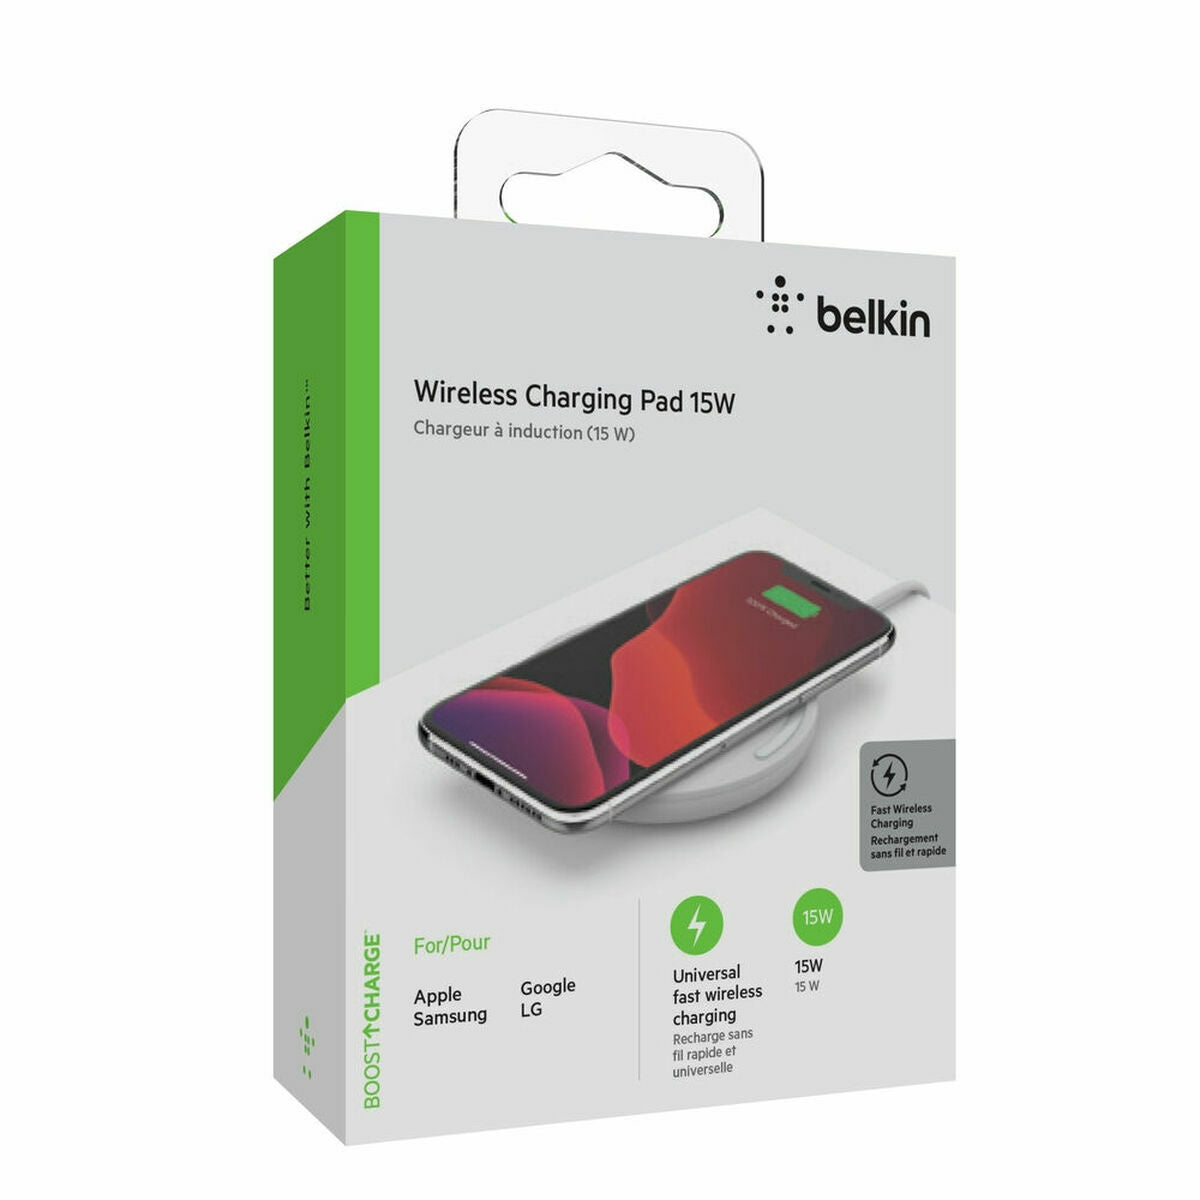 Chargeur sans fil avec support pour mobiles Belkin WIA002VFWH 15W